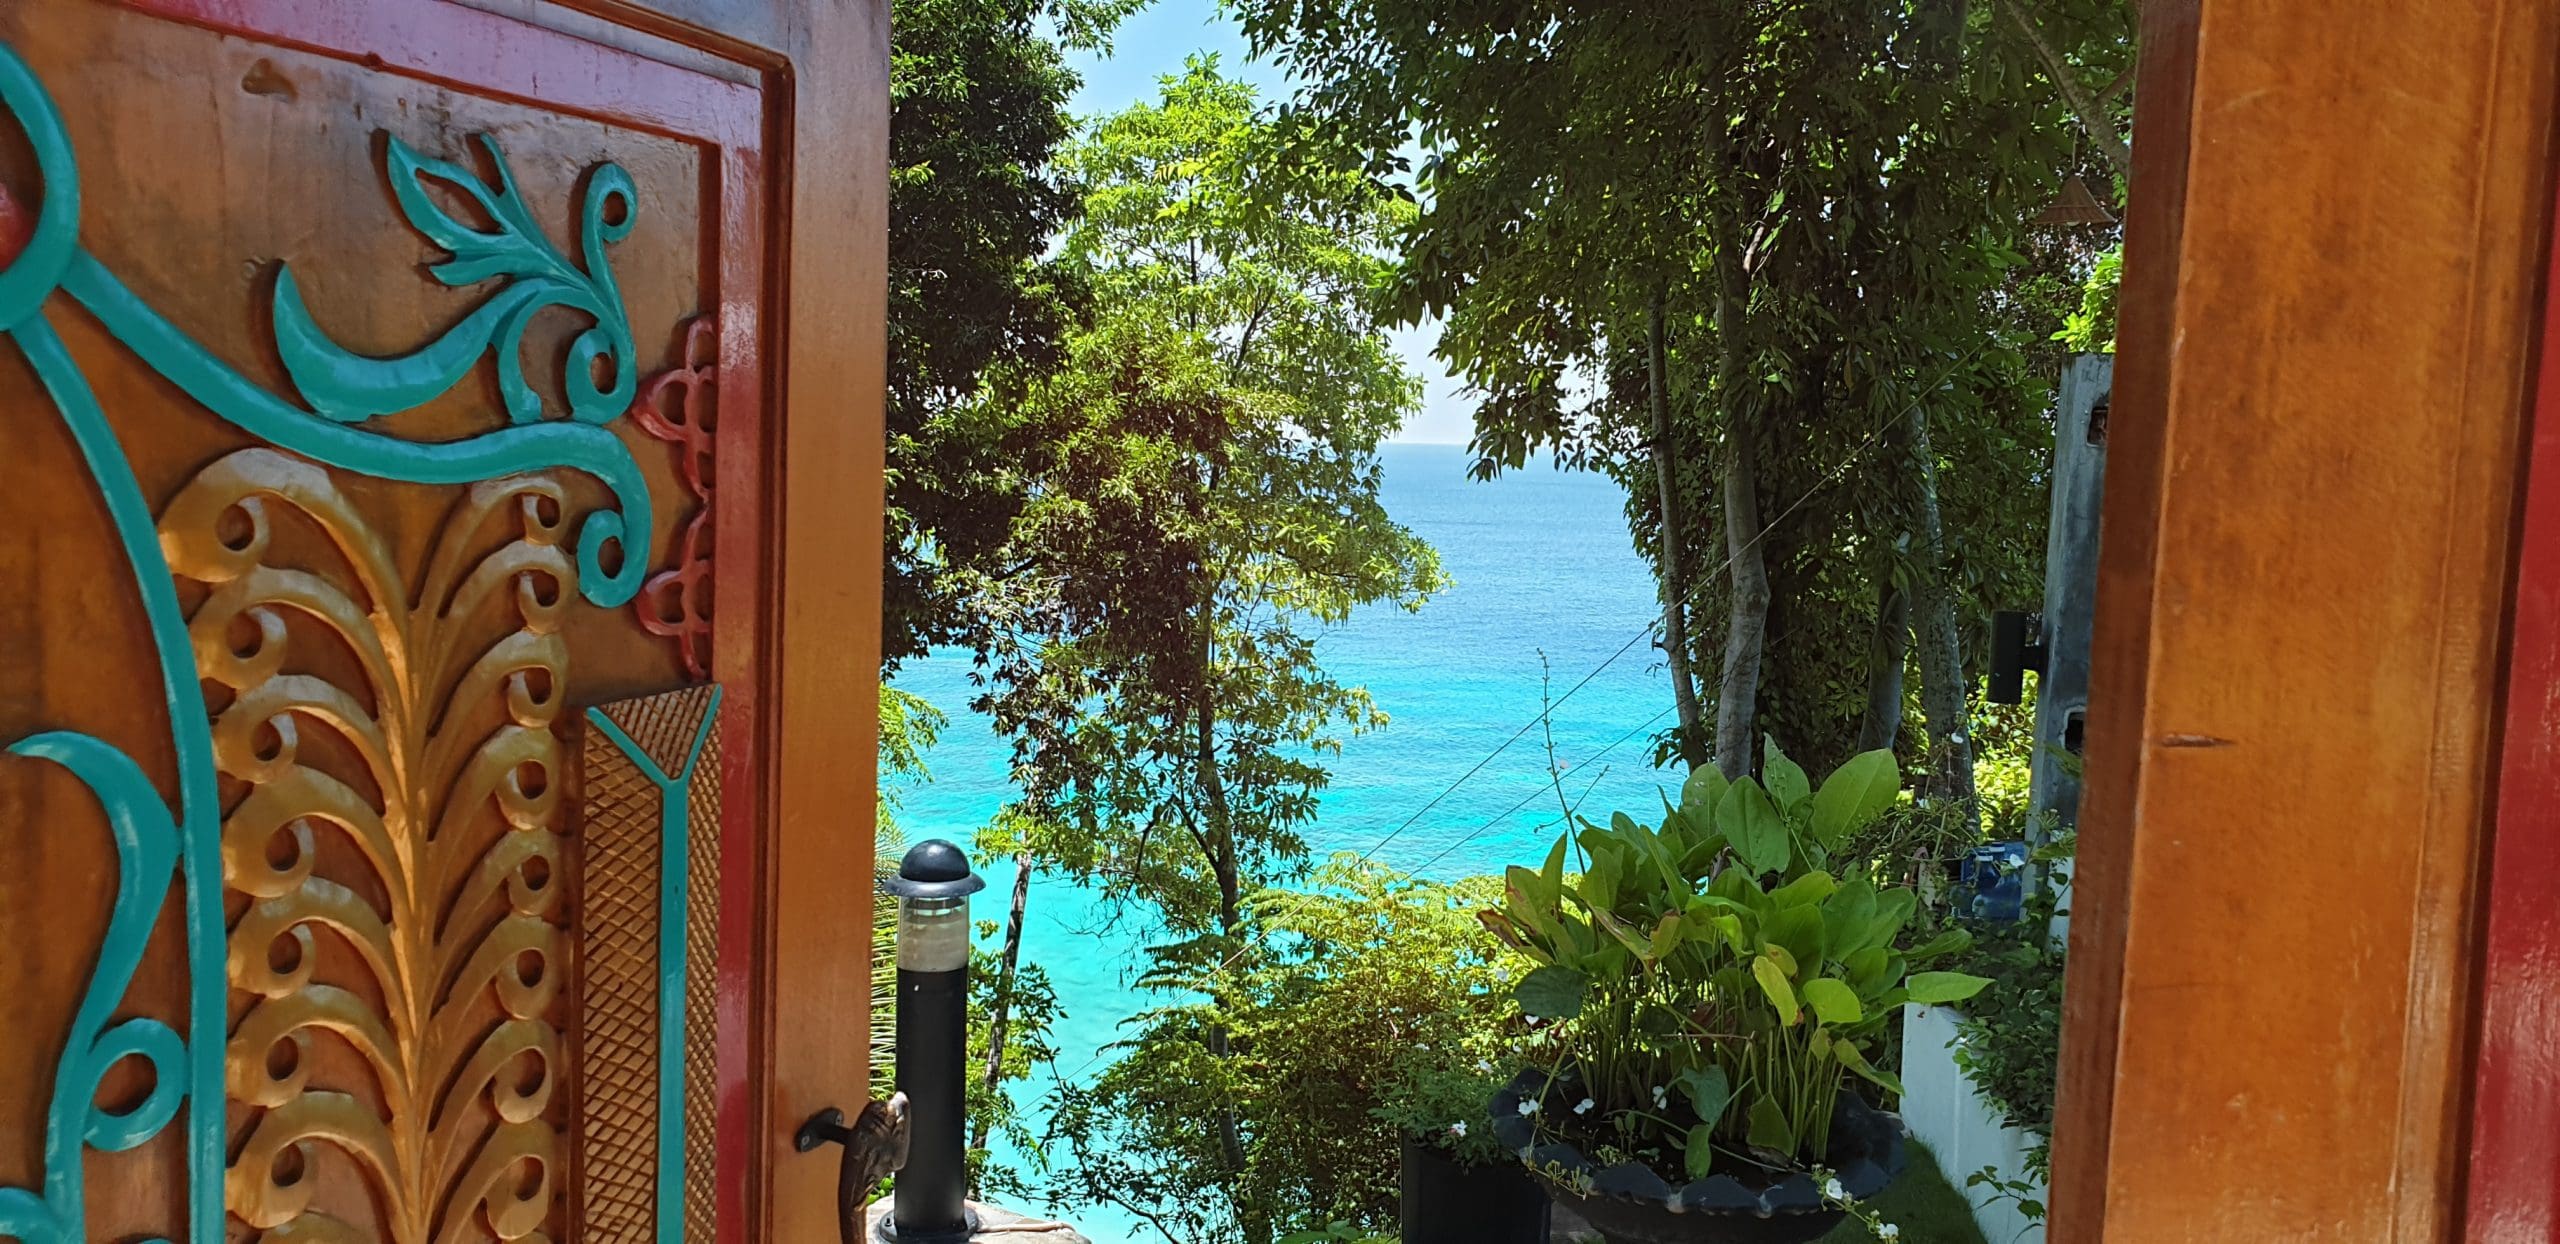 The view through the doors to Casa Nemo